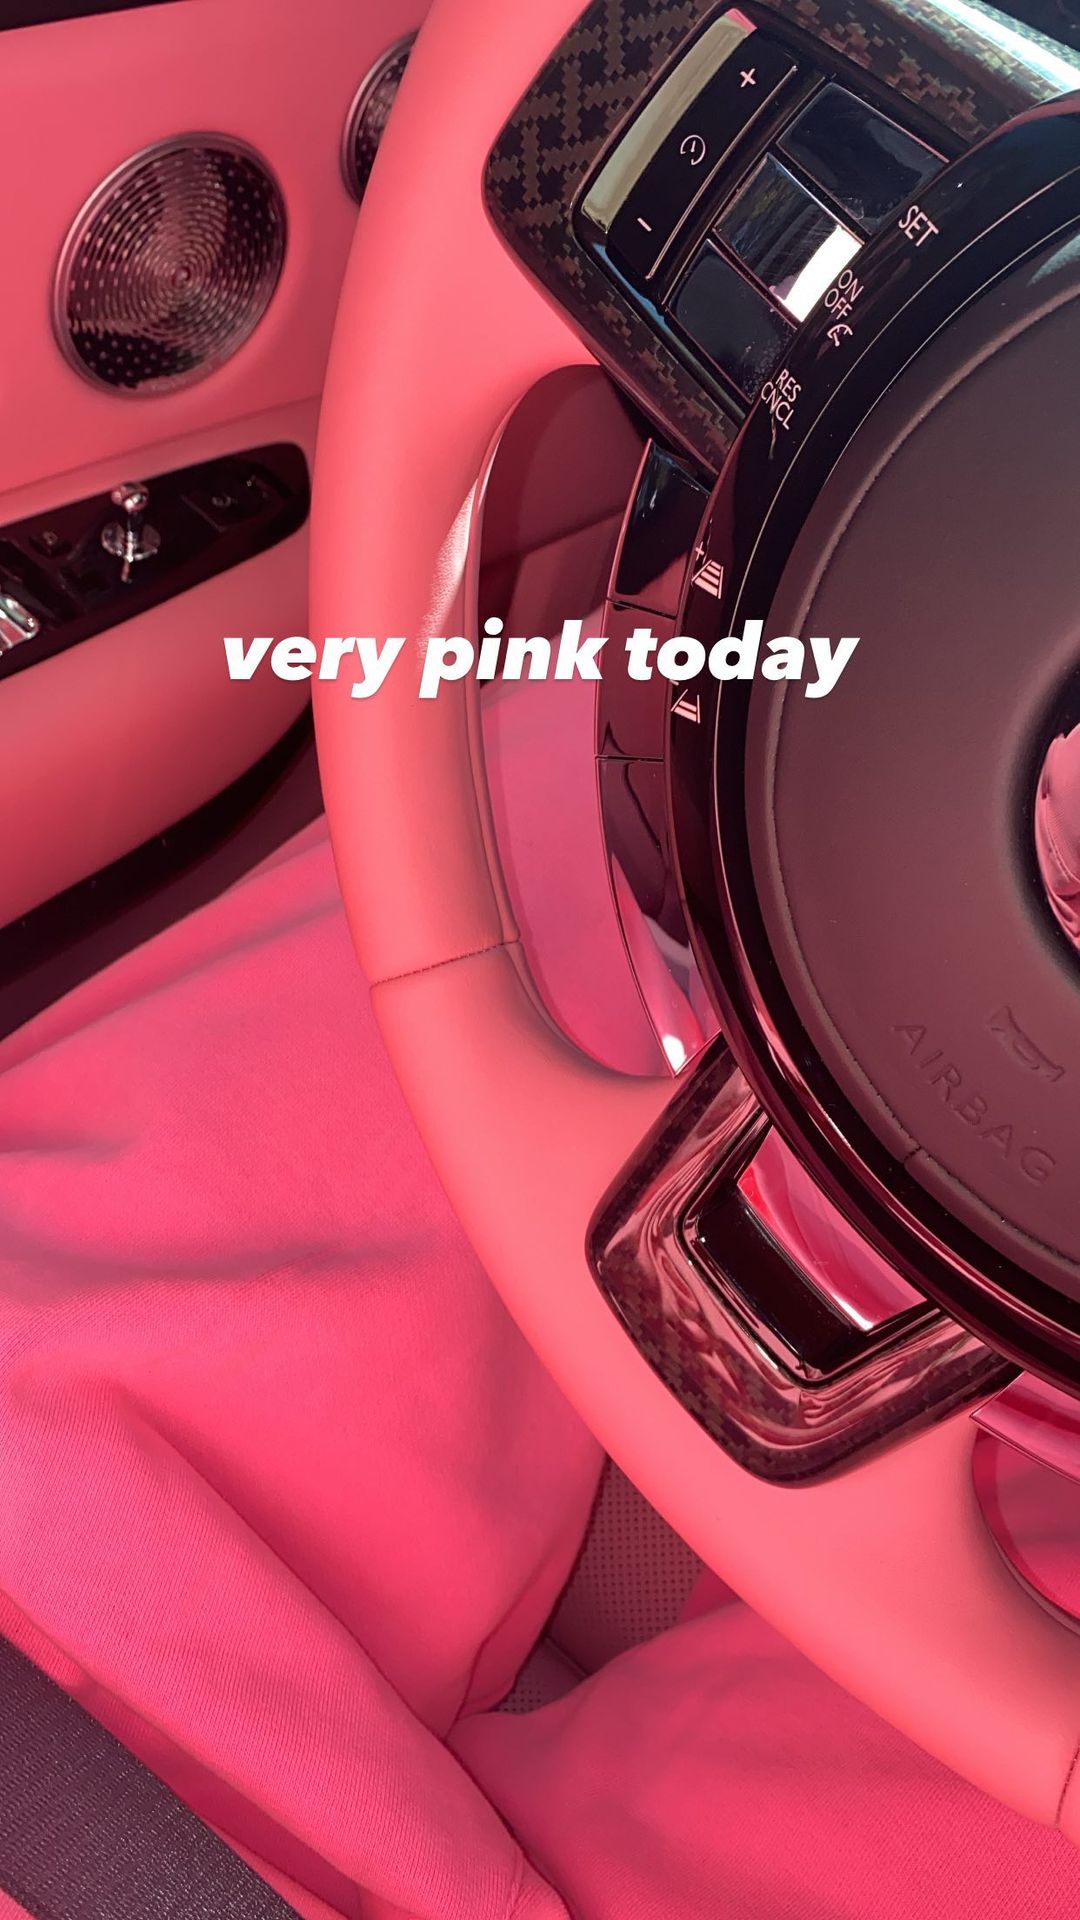 m  on X baby pink rolls royce interior httpstcoRSheK3Wqy9  X